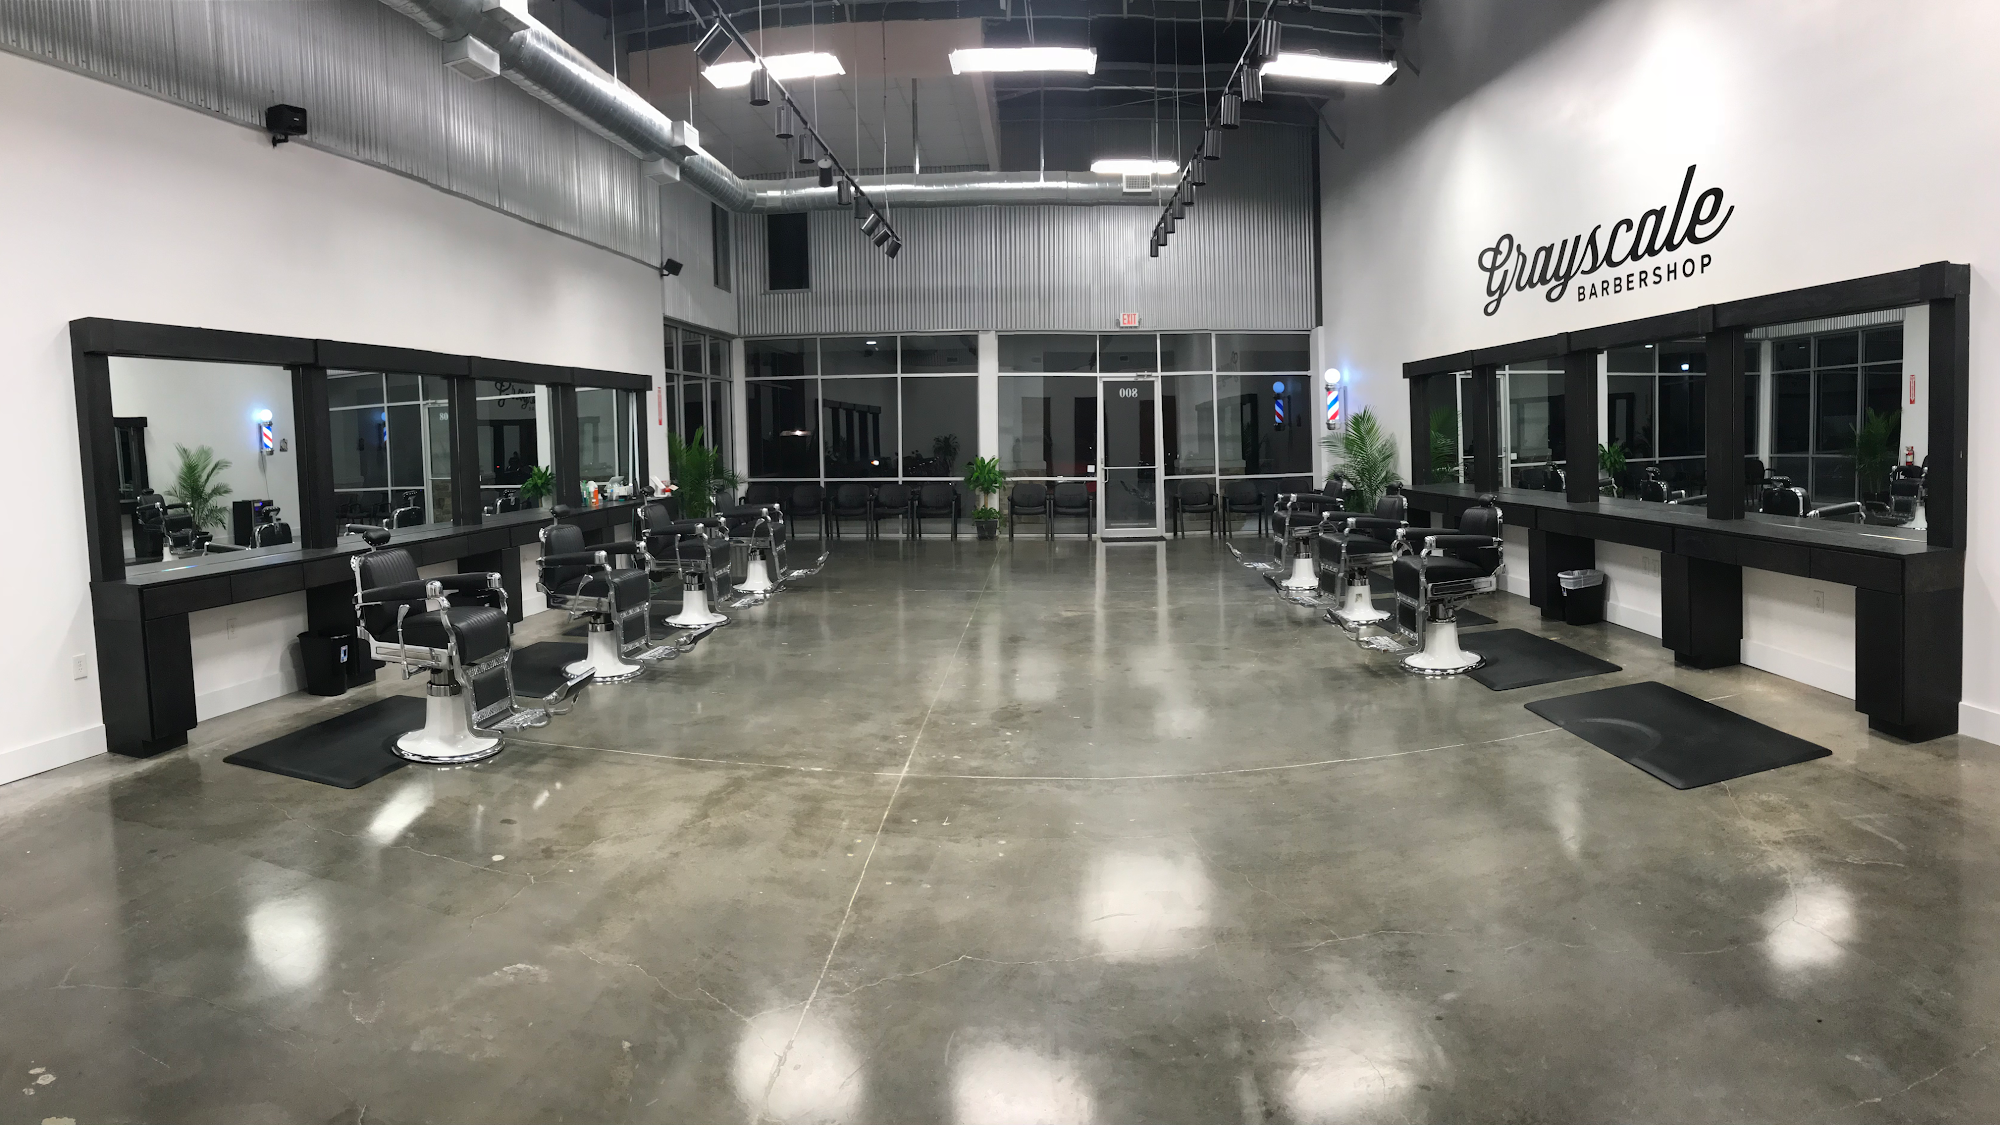 Grayscale Barbershop